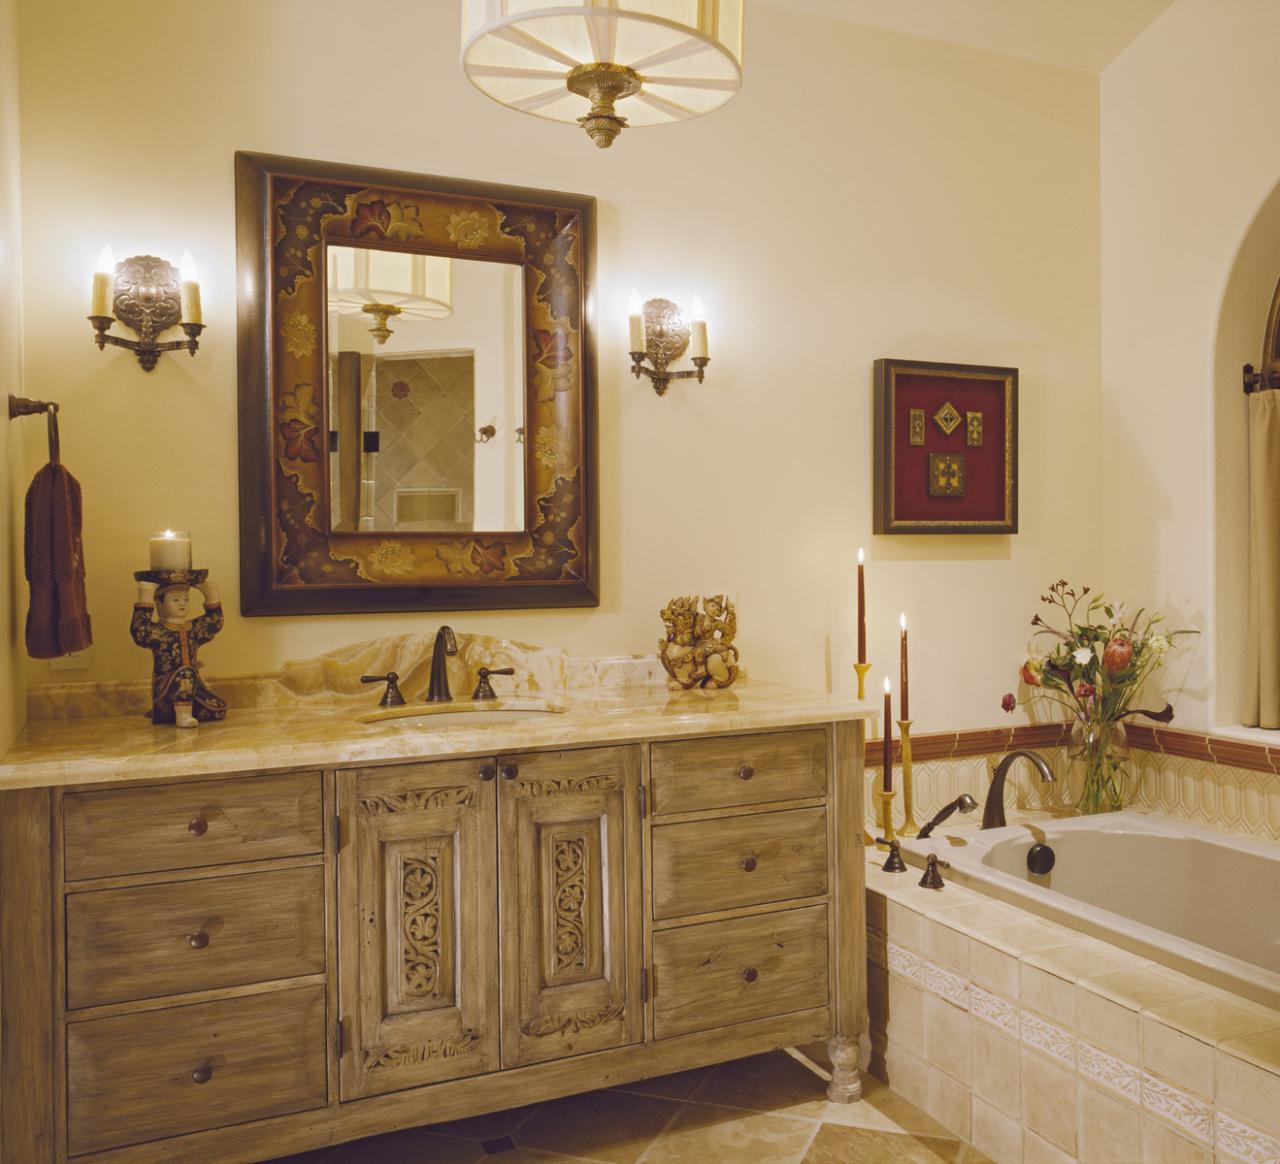 http://www.homeprada.com/wp-content/uploads/2014/10/antique-bathroom-vanities-cabinets---viewing-gallery-eklq1ybx.jpg